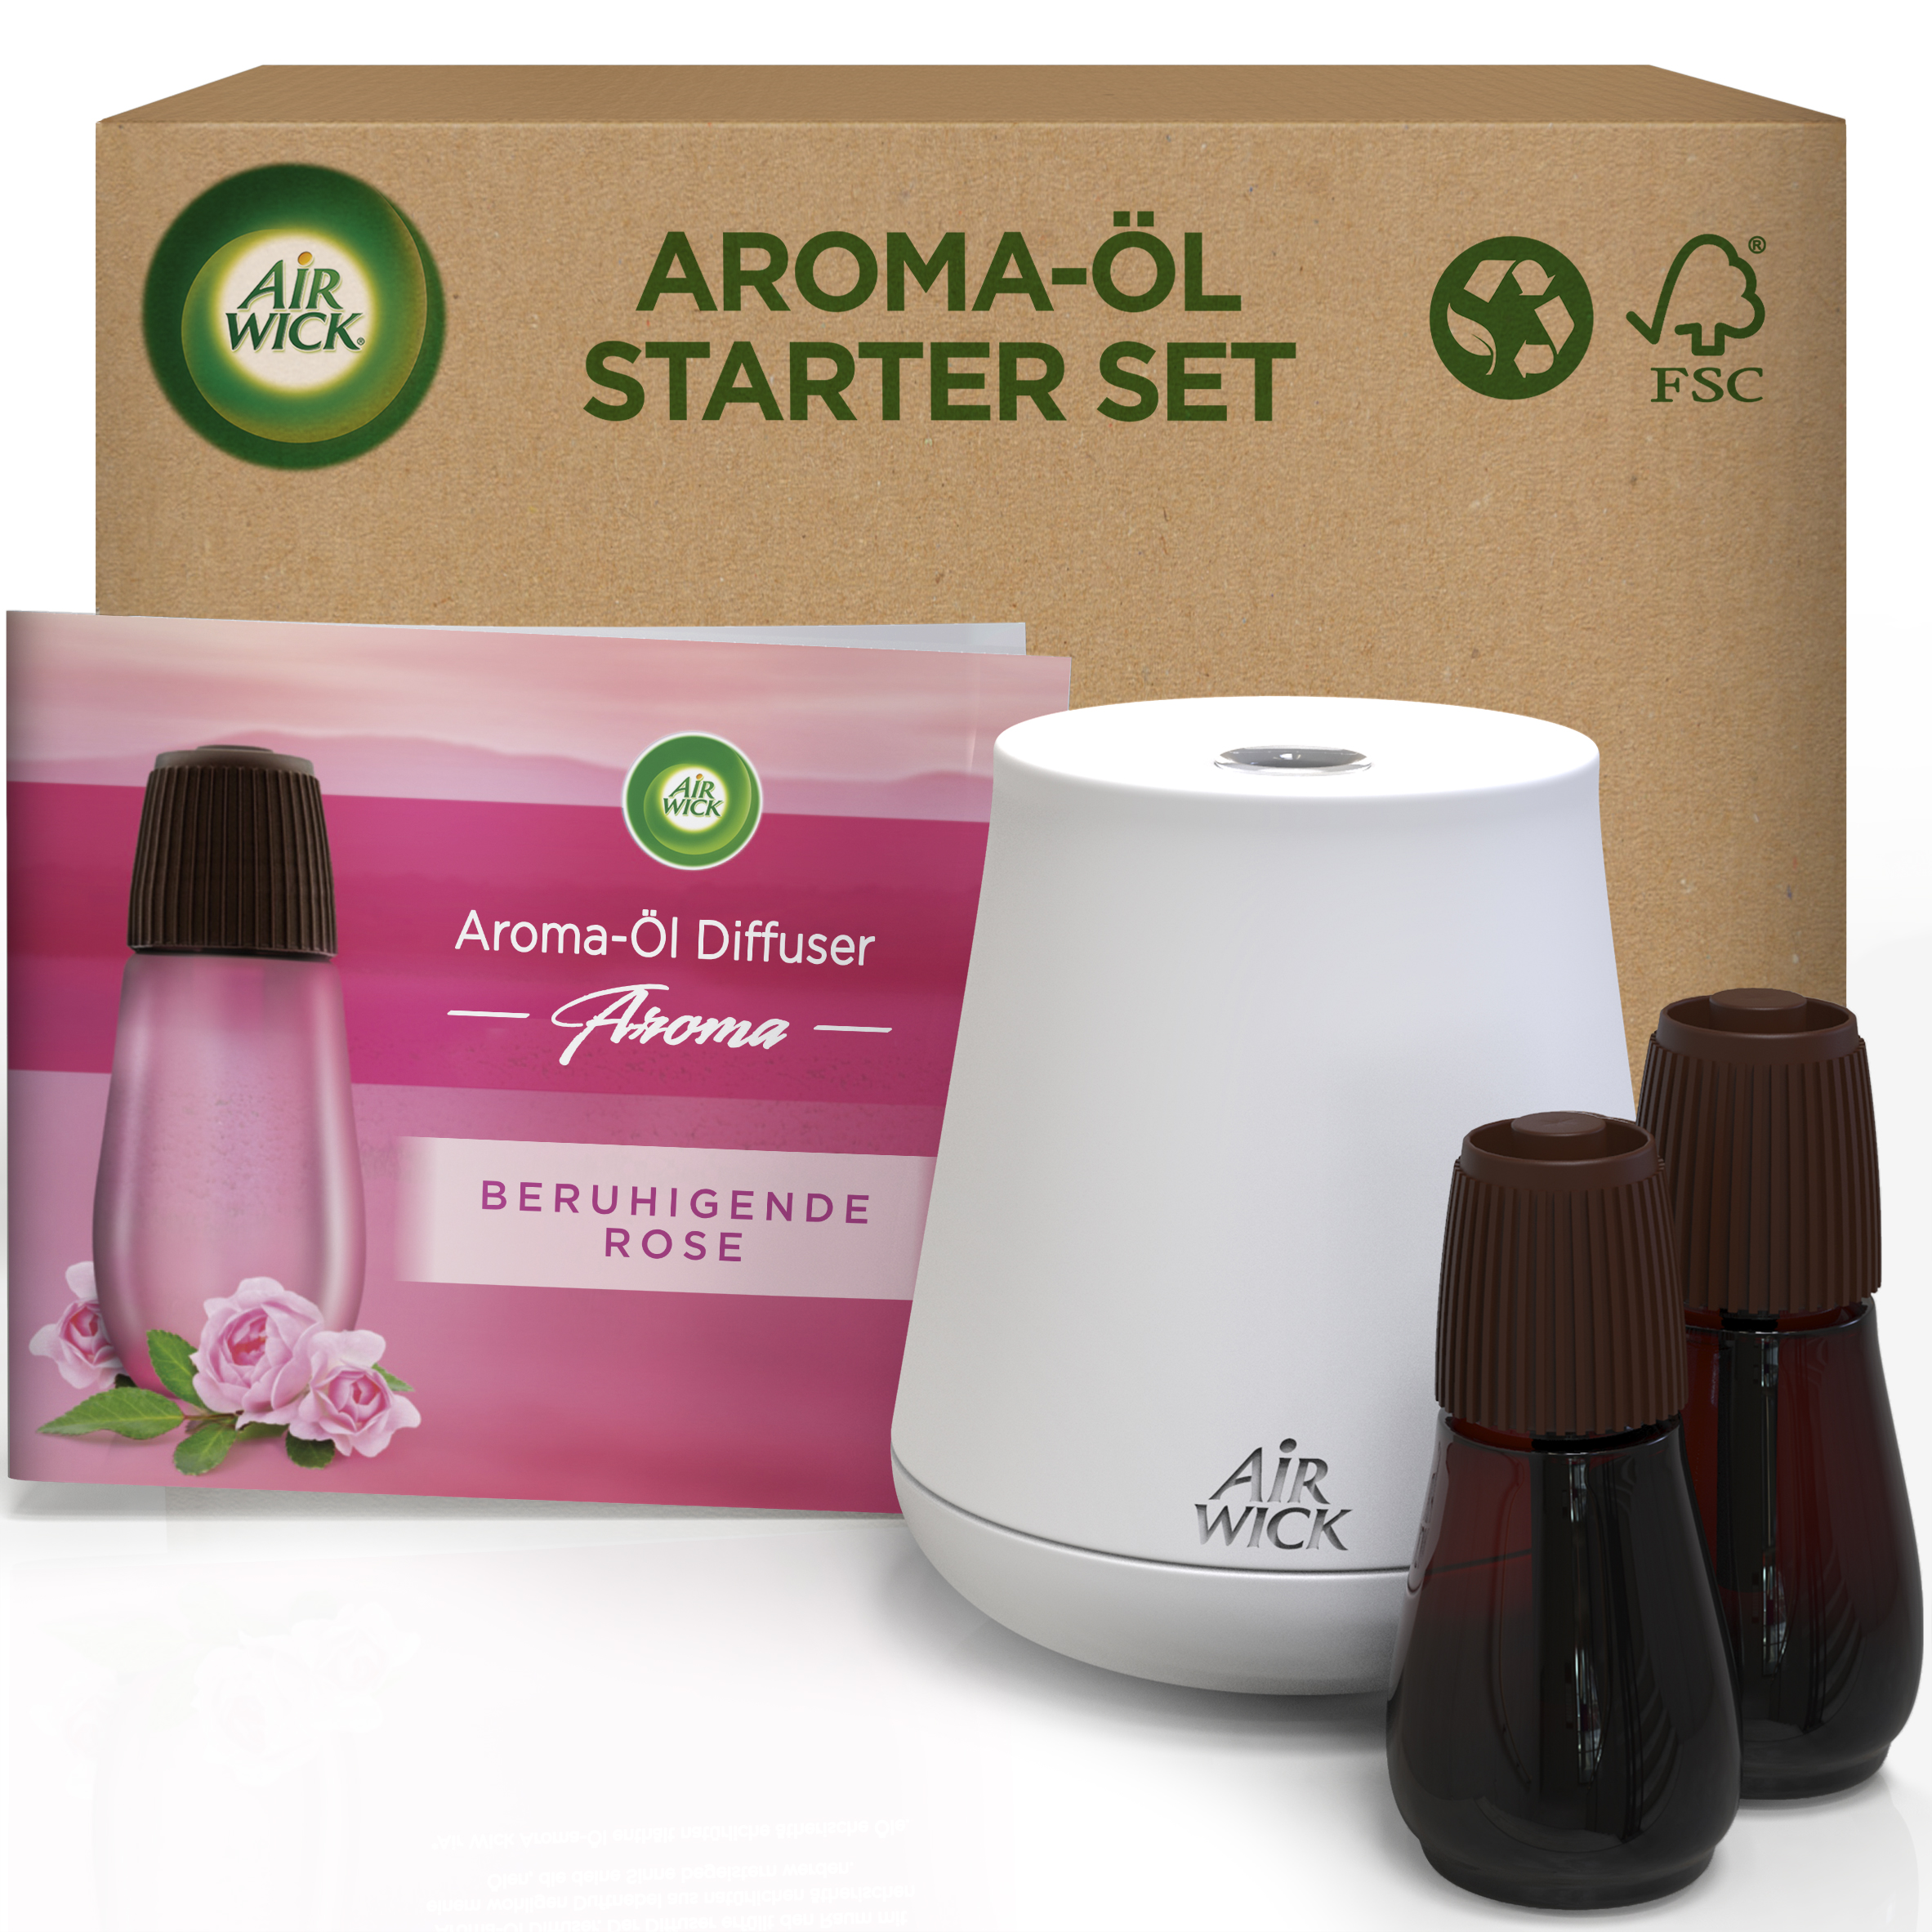 Air Wick Aroma-Öl Diffuser eCom Starter-Set Beruhigende Rose